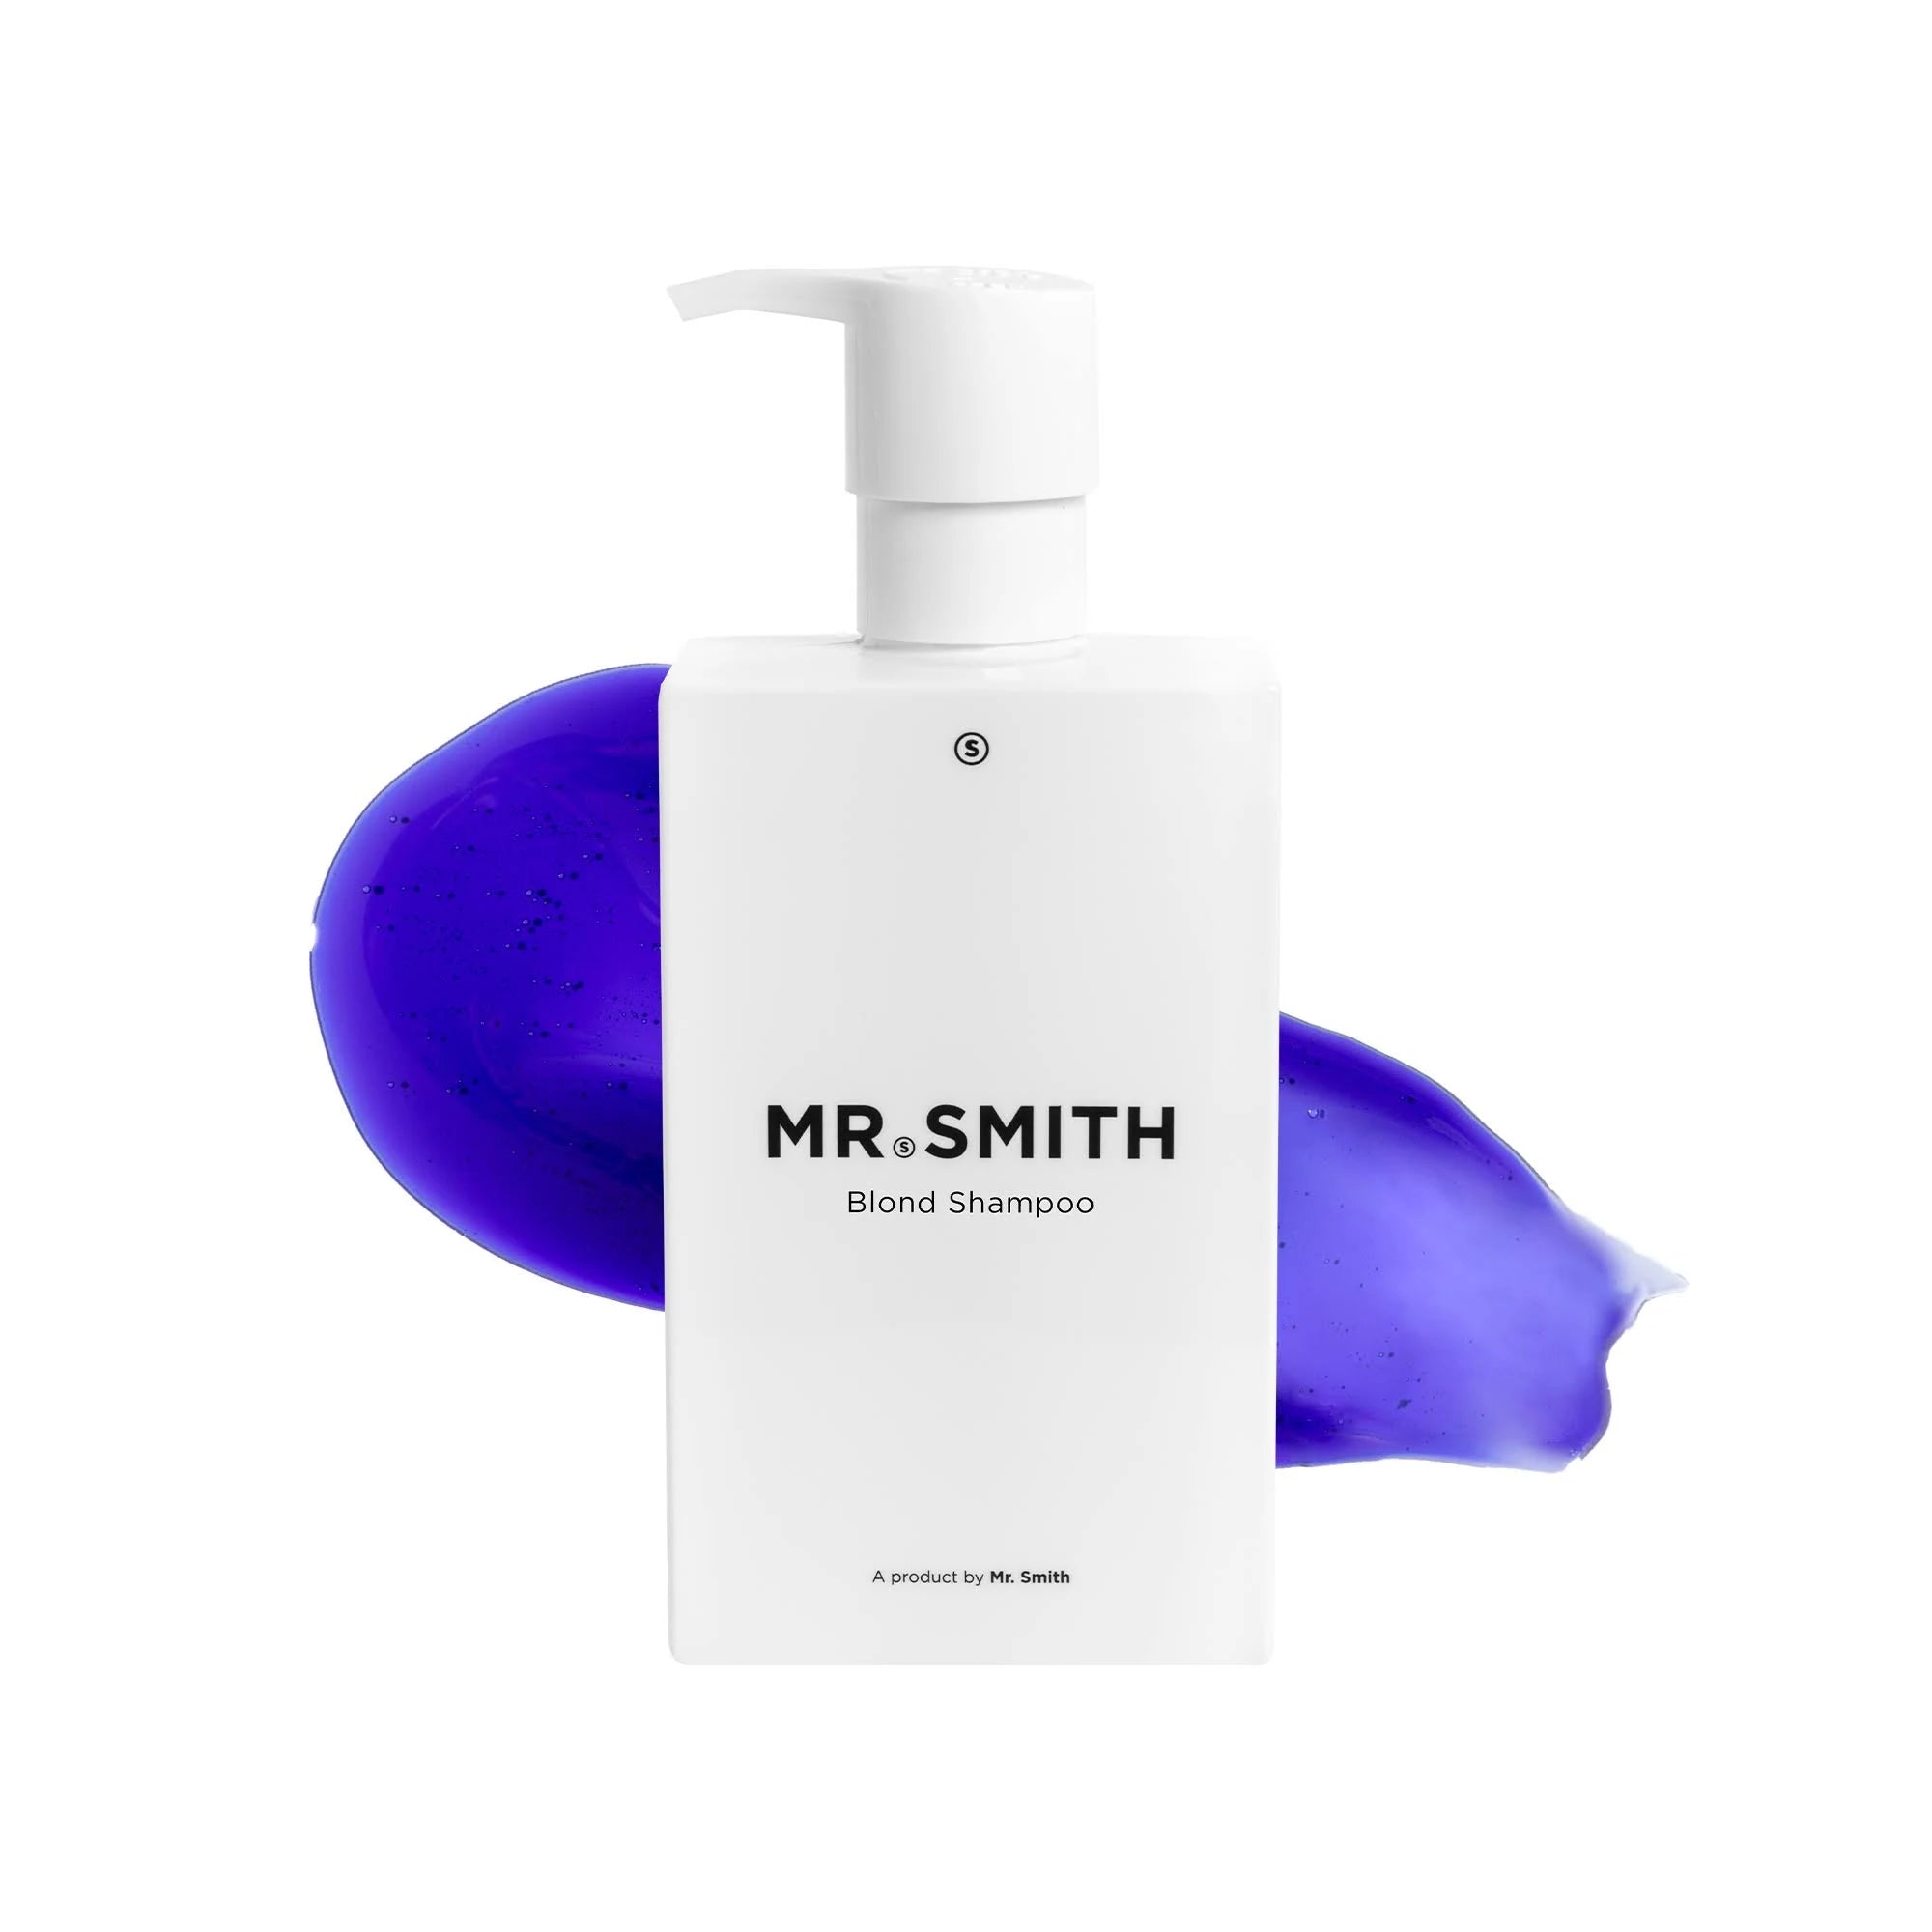 MR. SMITH Blond Shampoo - 275mlk